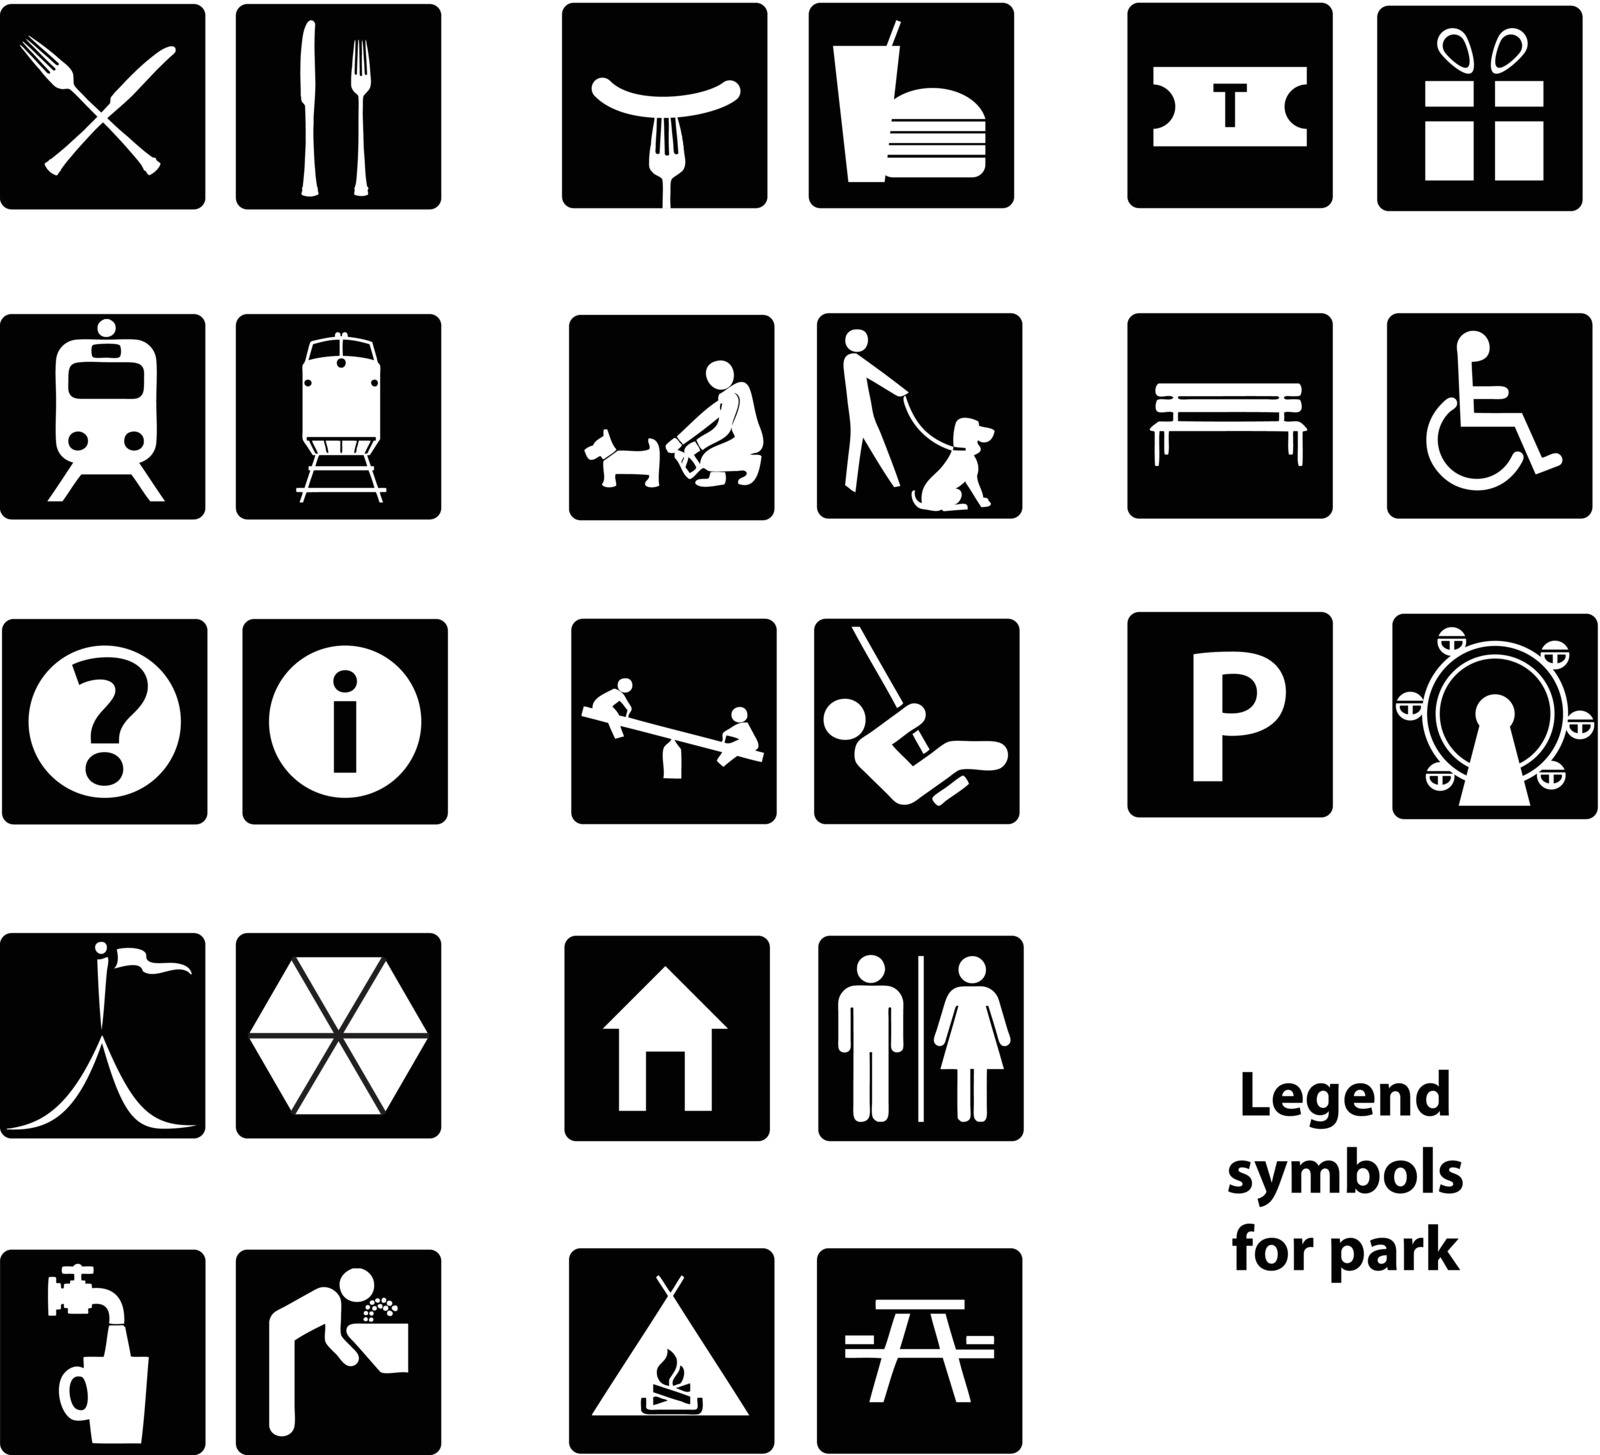 Legend symbols for park by VIPDesignUSA